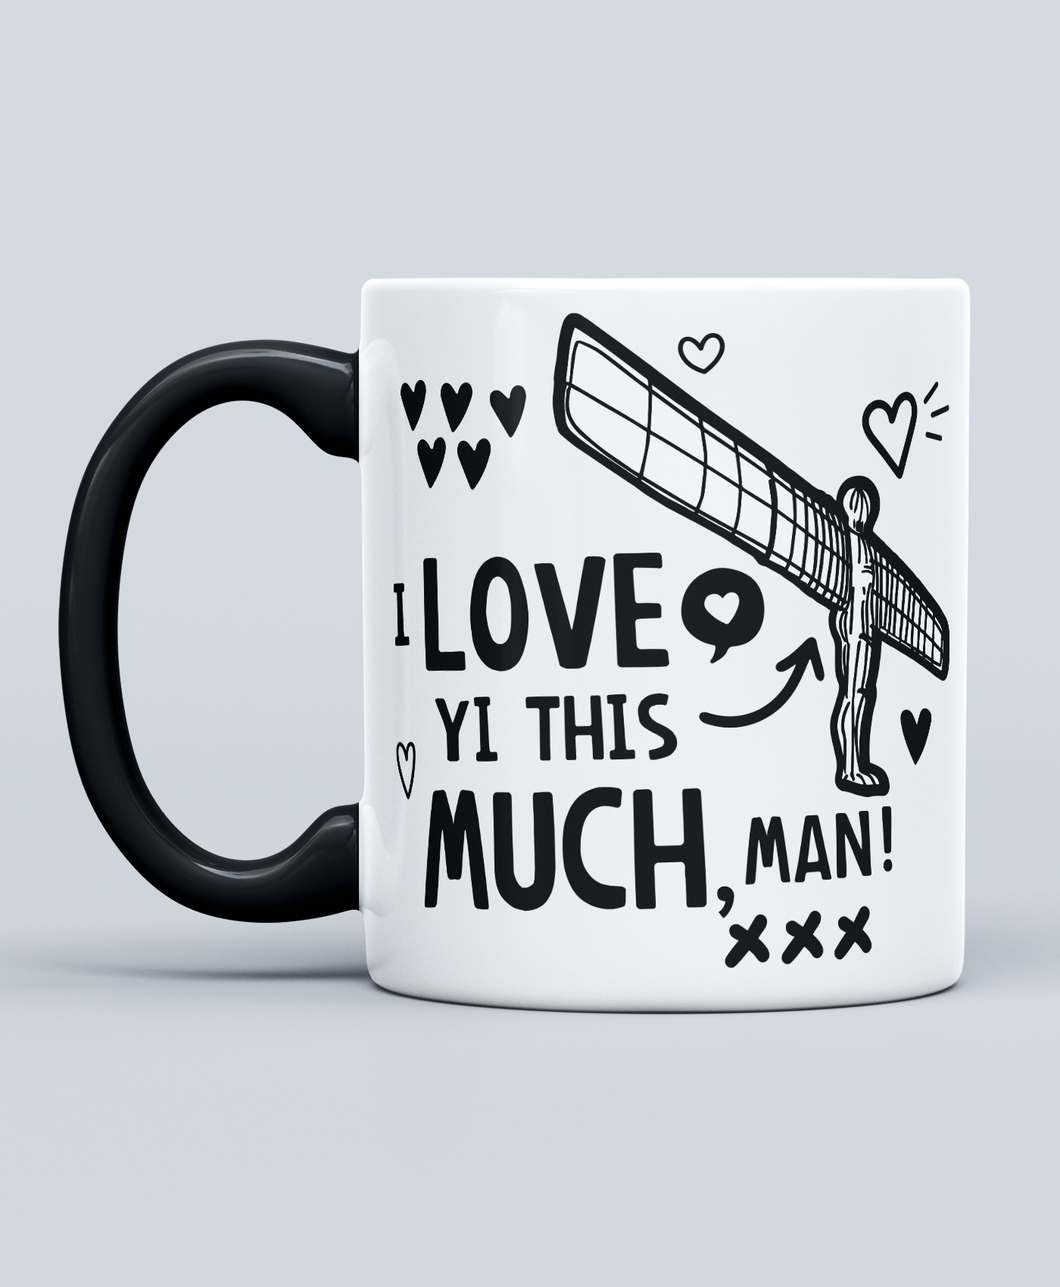 I Love Yi This Much, Man! - Mug